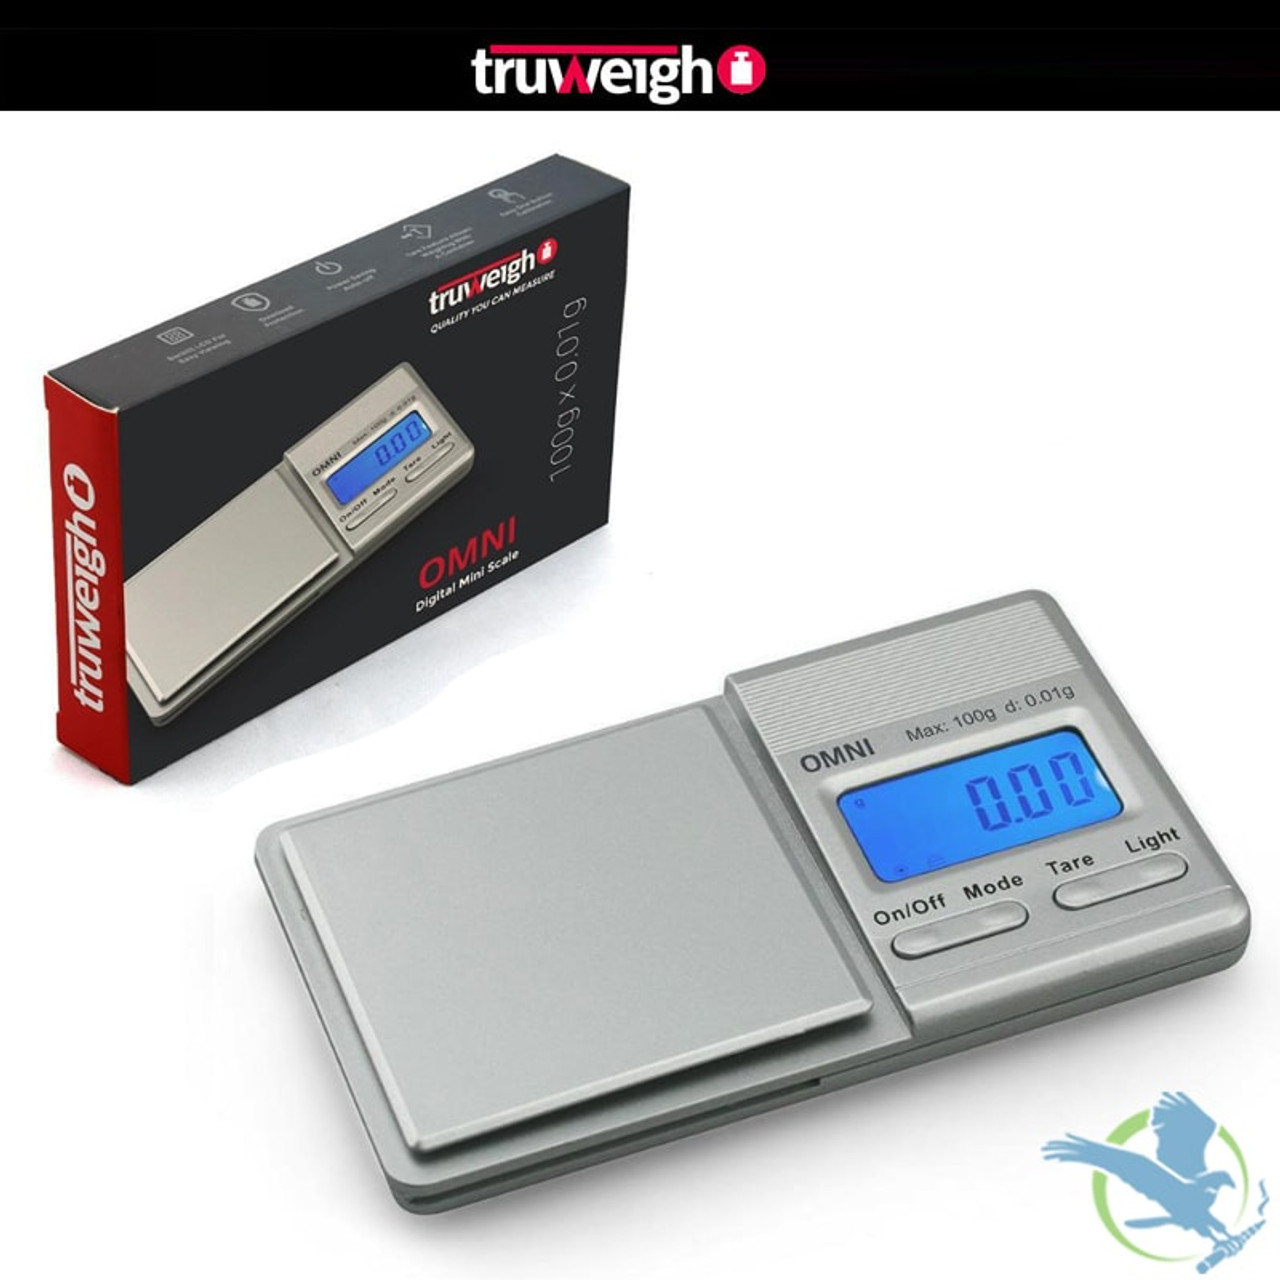  Truweigh Omni Digital Mini Scale - (100g x 0.01g